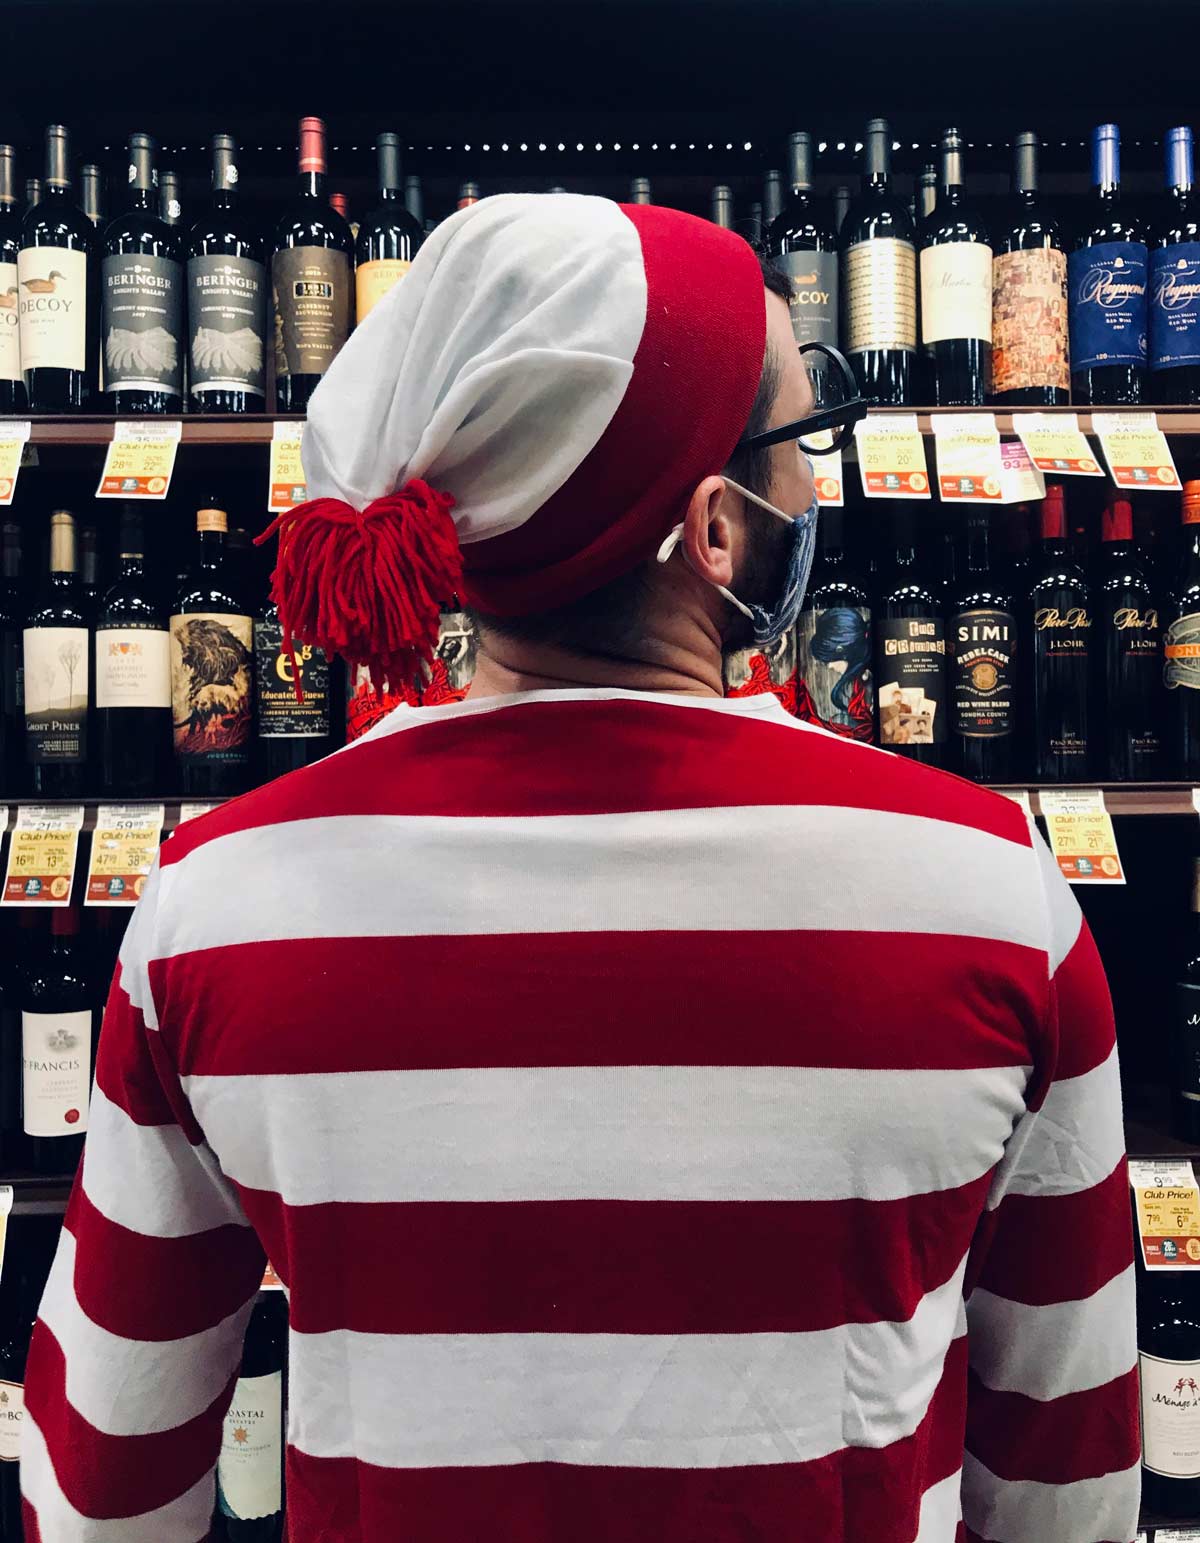 Everyone asks “Where’s Waldo” but nobody asks “How’s Waldo?”